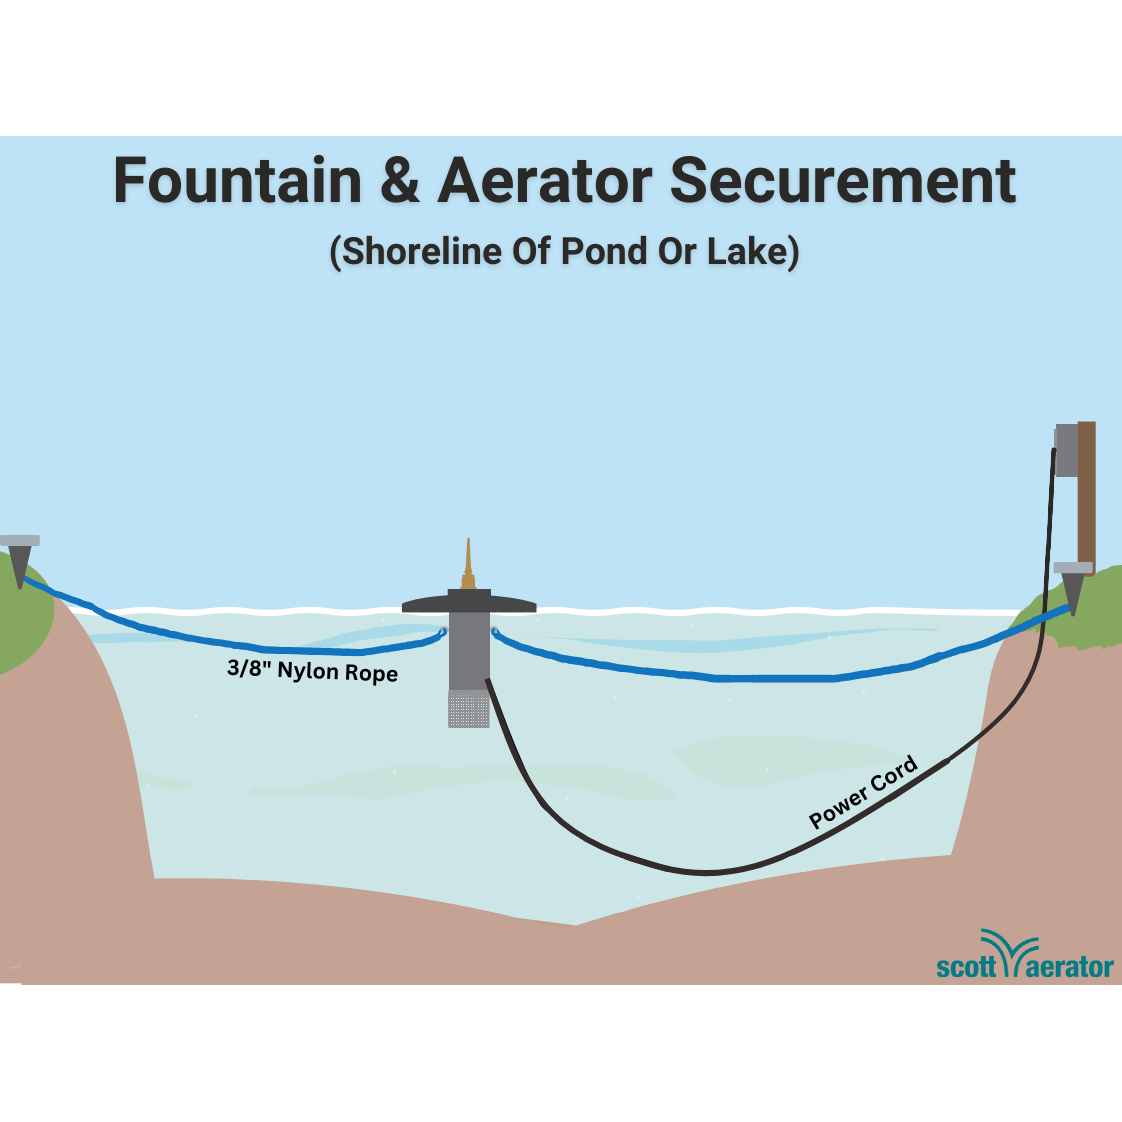 Scott Aerator Jet Stream Pond Fountain